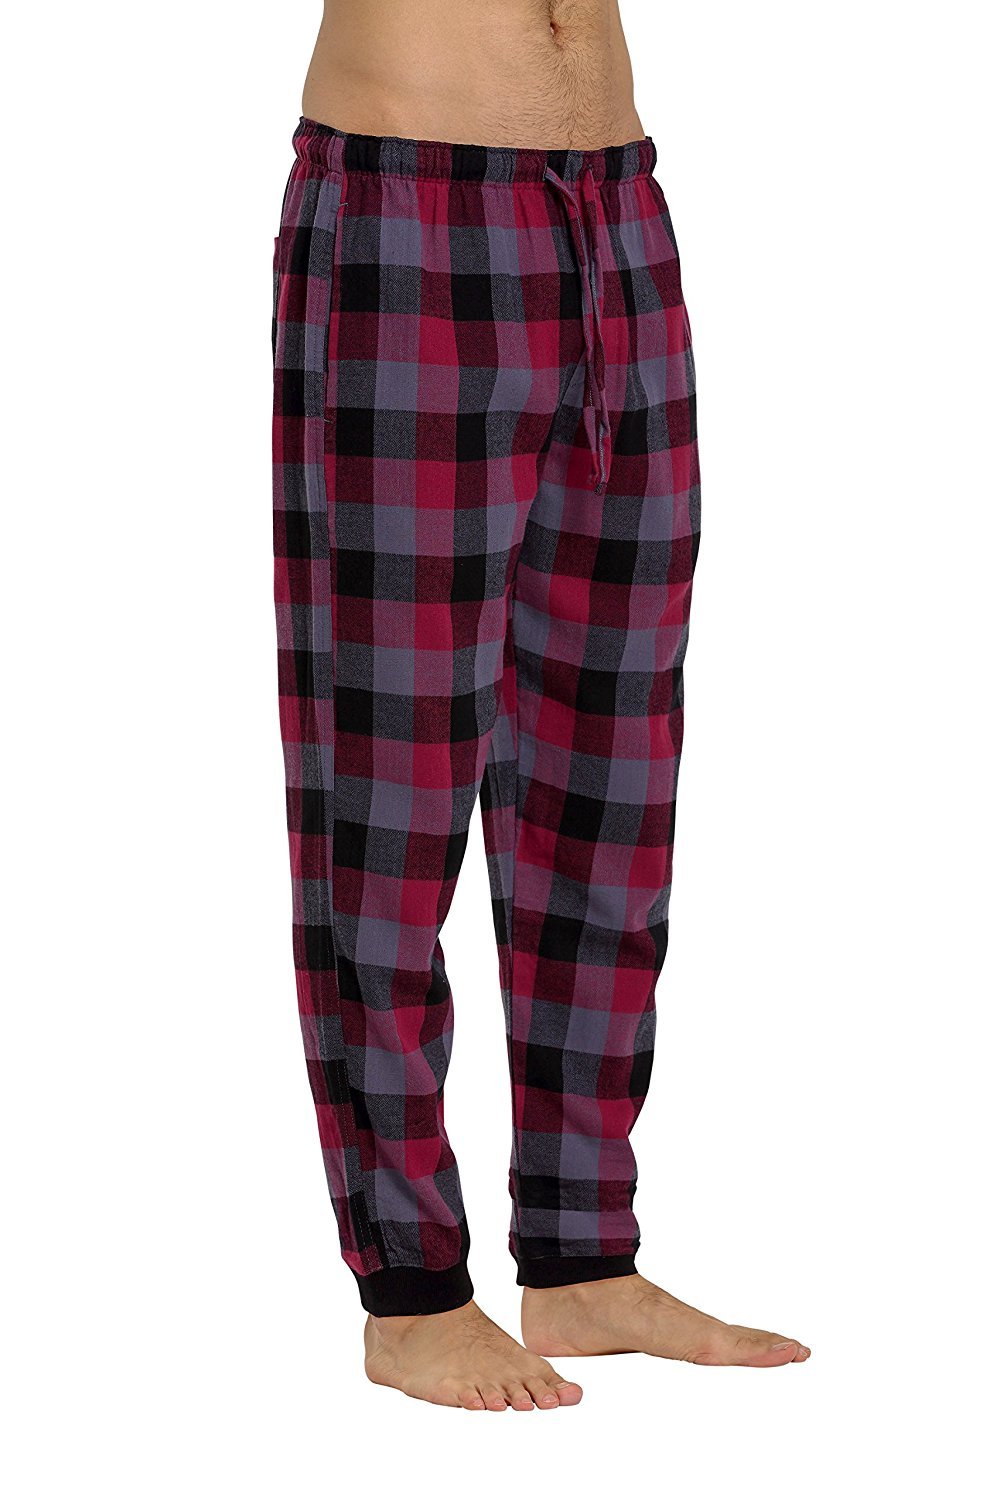 CYZ Men's Fleece Pajama Pant 